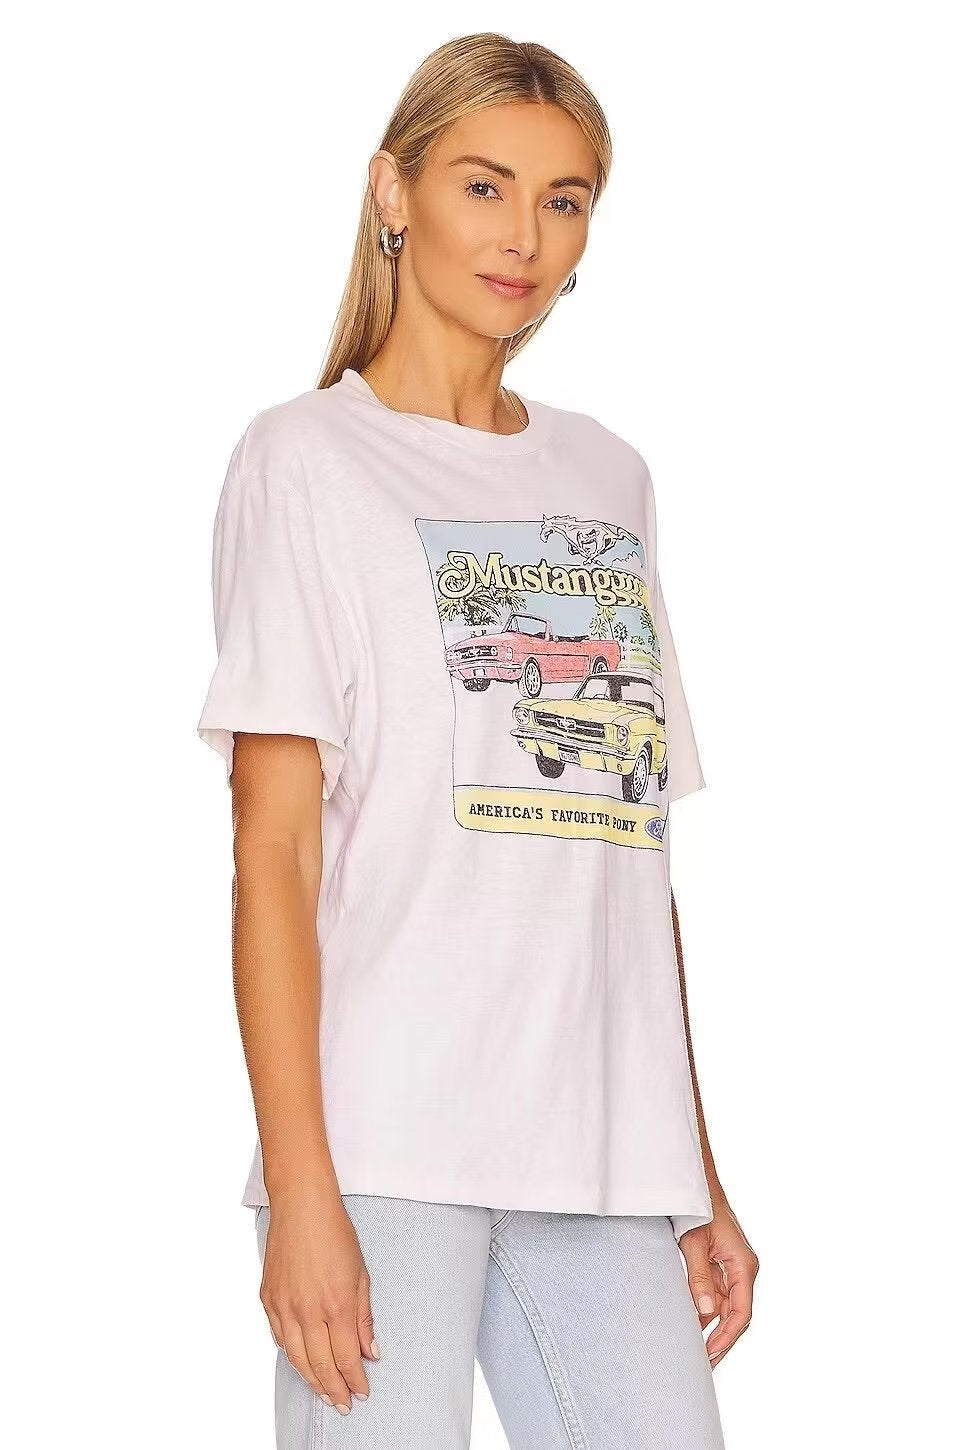 Summer Locomotive Printed Round Neck Pullover Short Sleeve T shirt Women